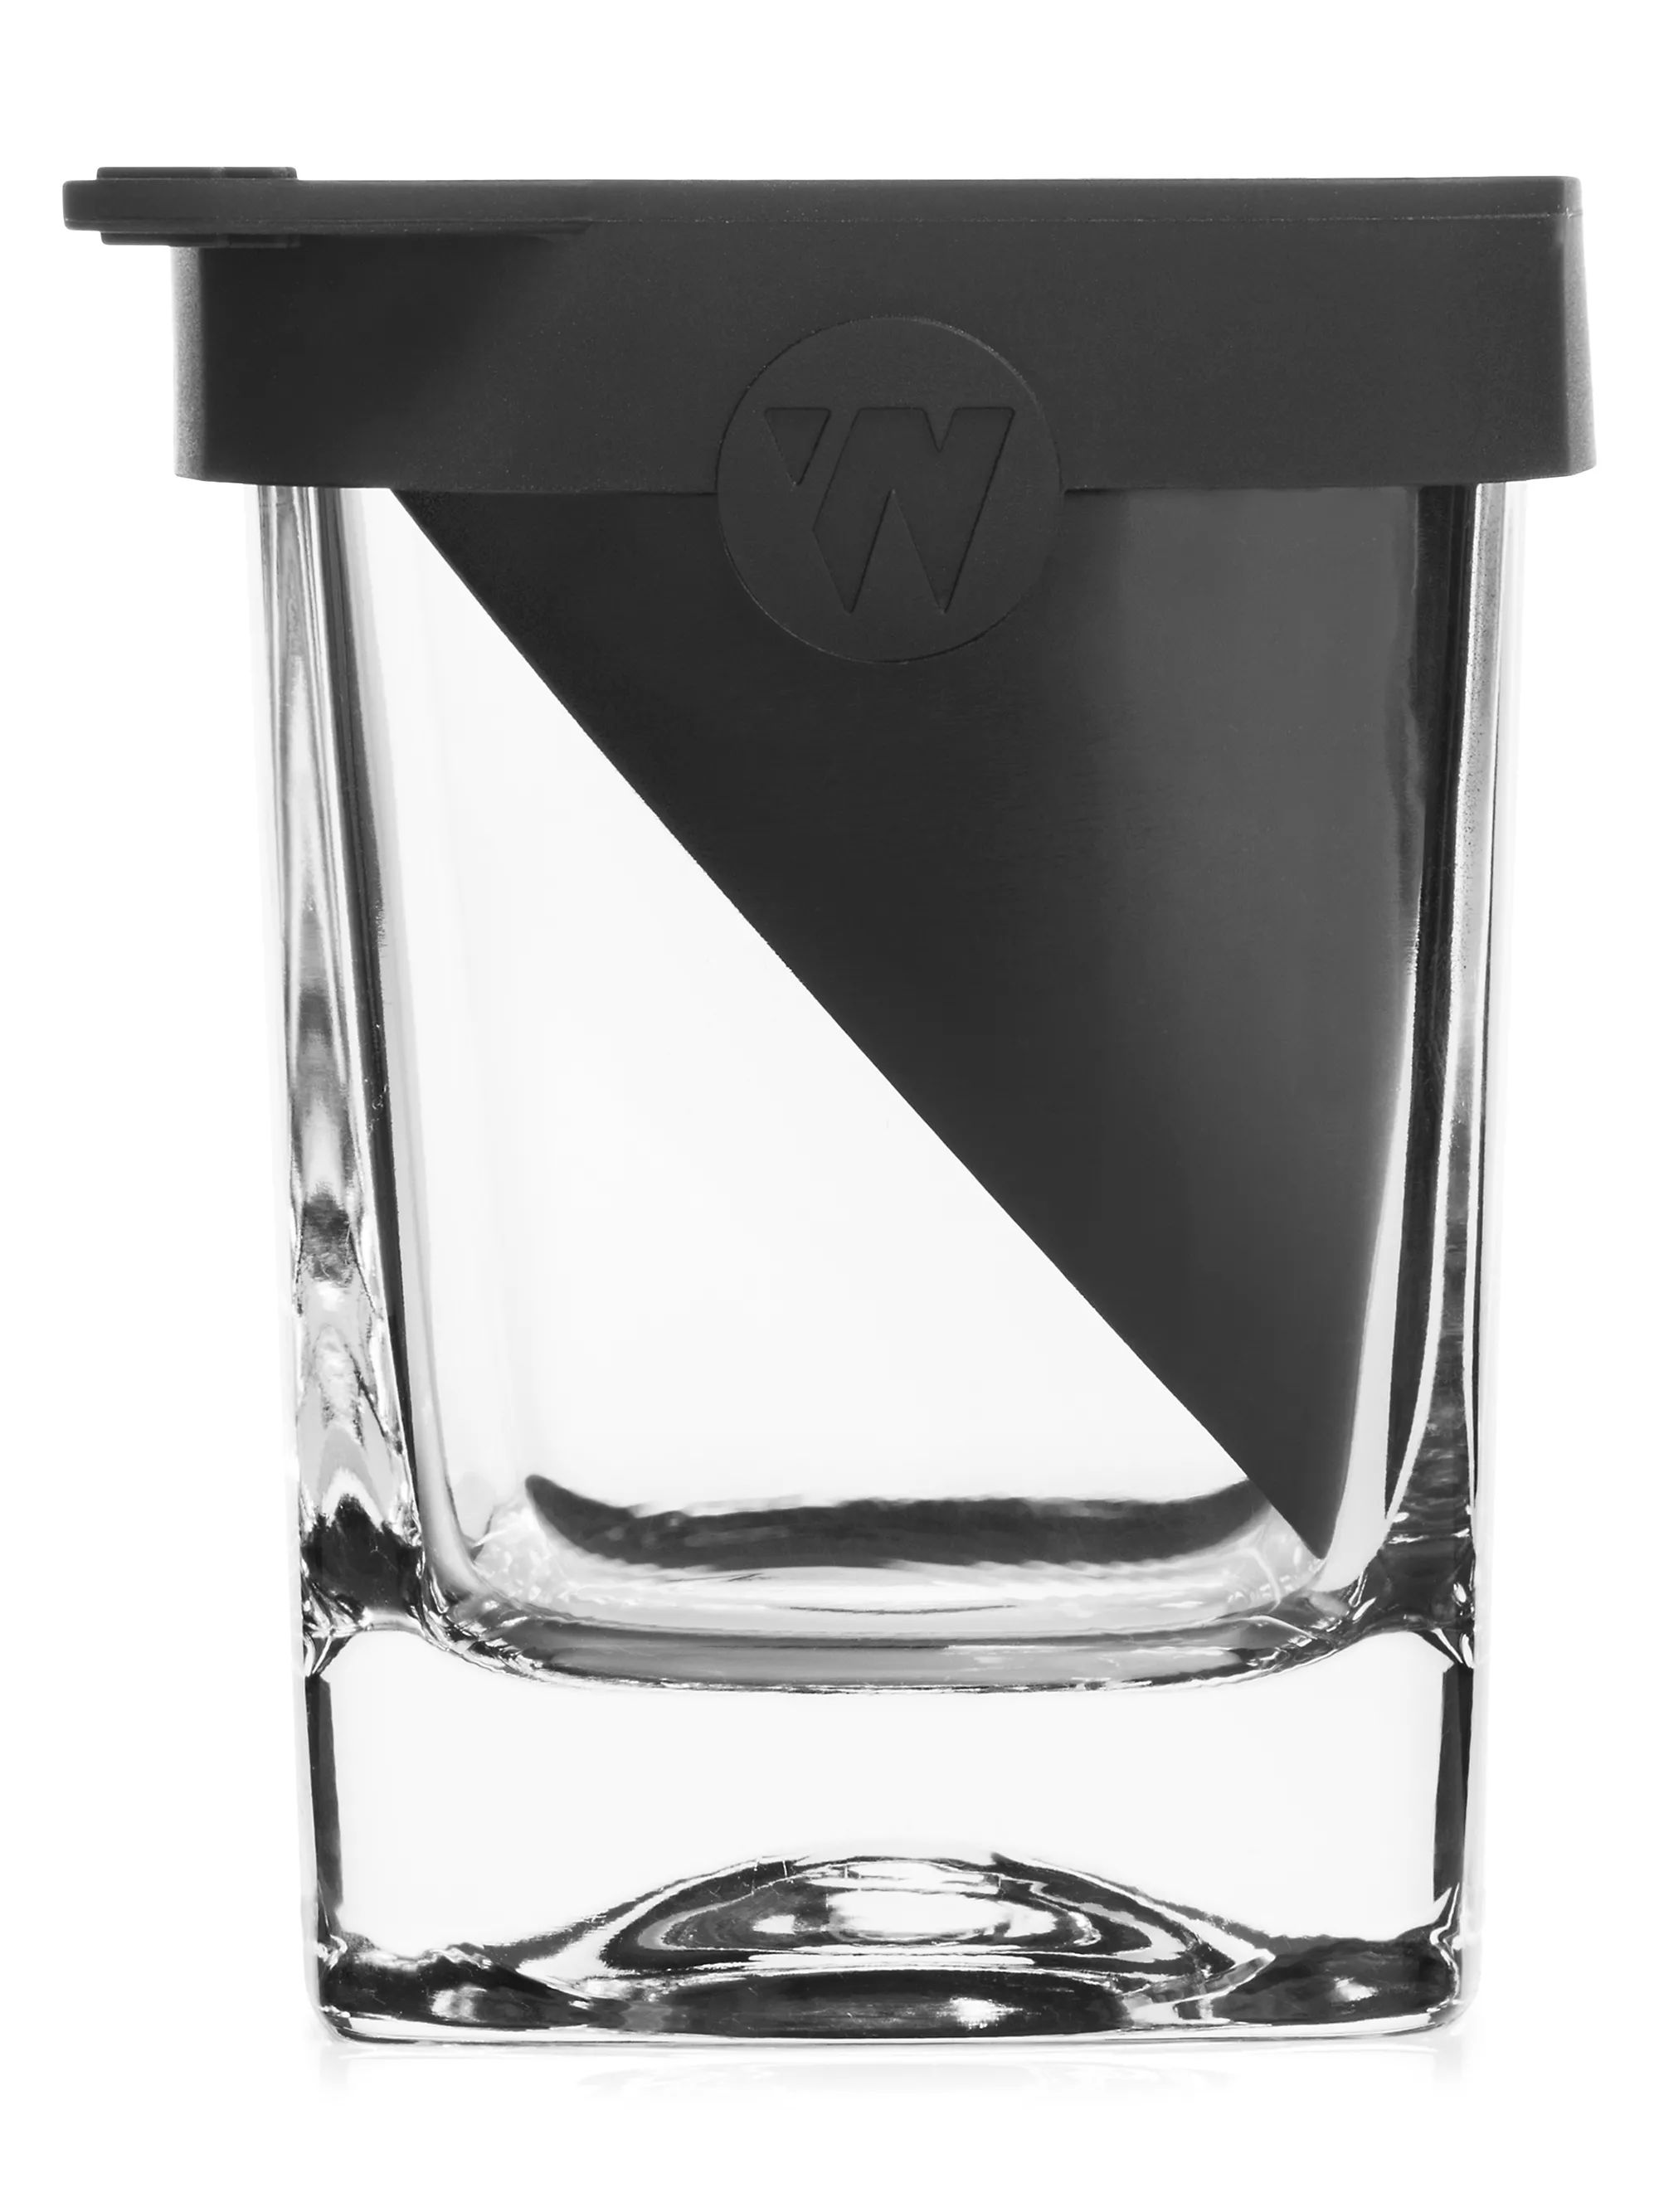 Drinkware & GlasswareCocktail & Martini GlassesCorkcicleWhiskey Wedge Glass$25 | Saks Fifth Avenue